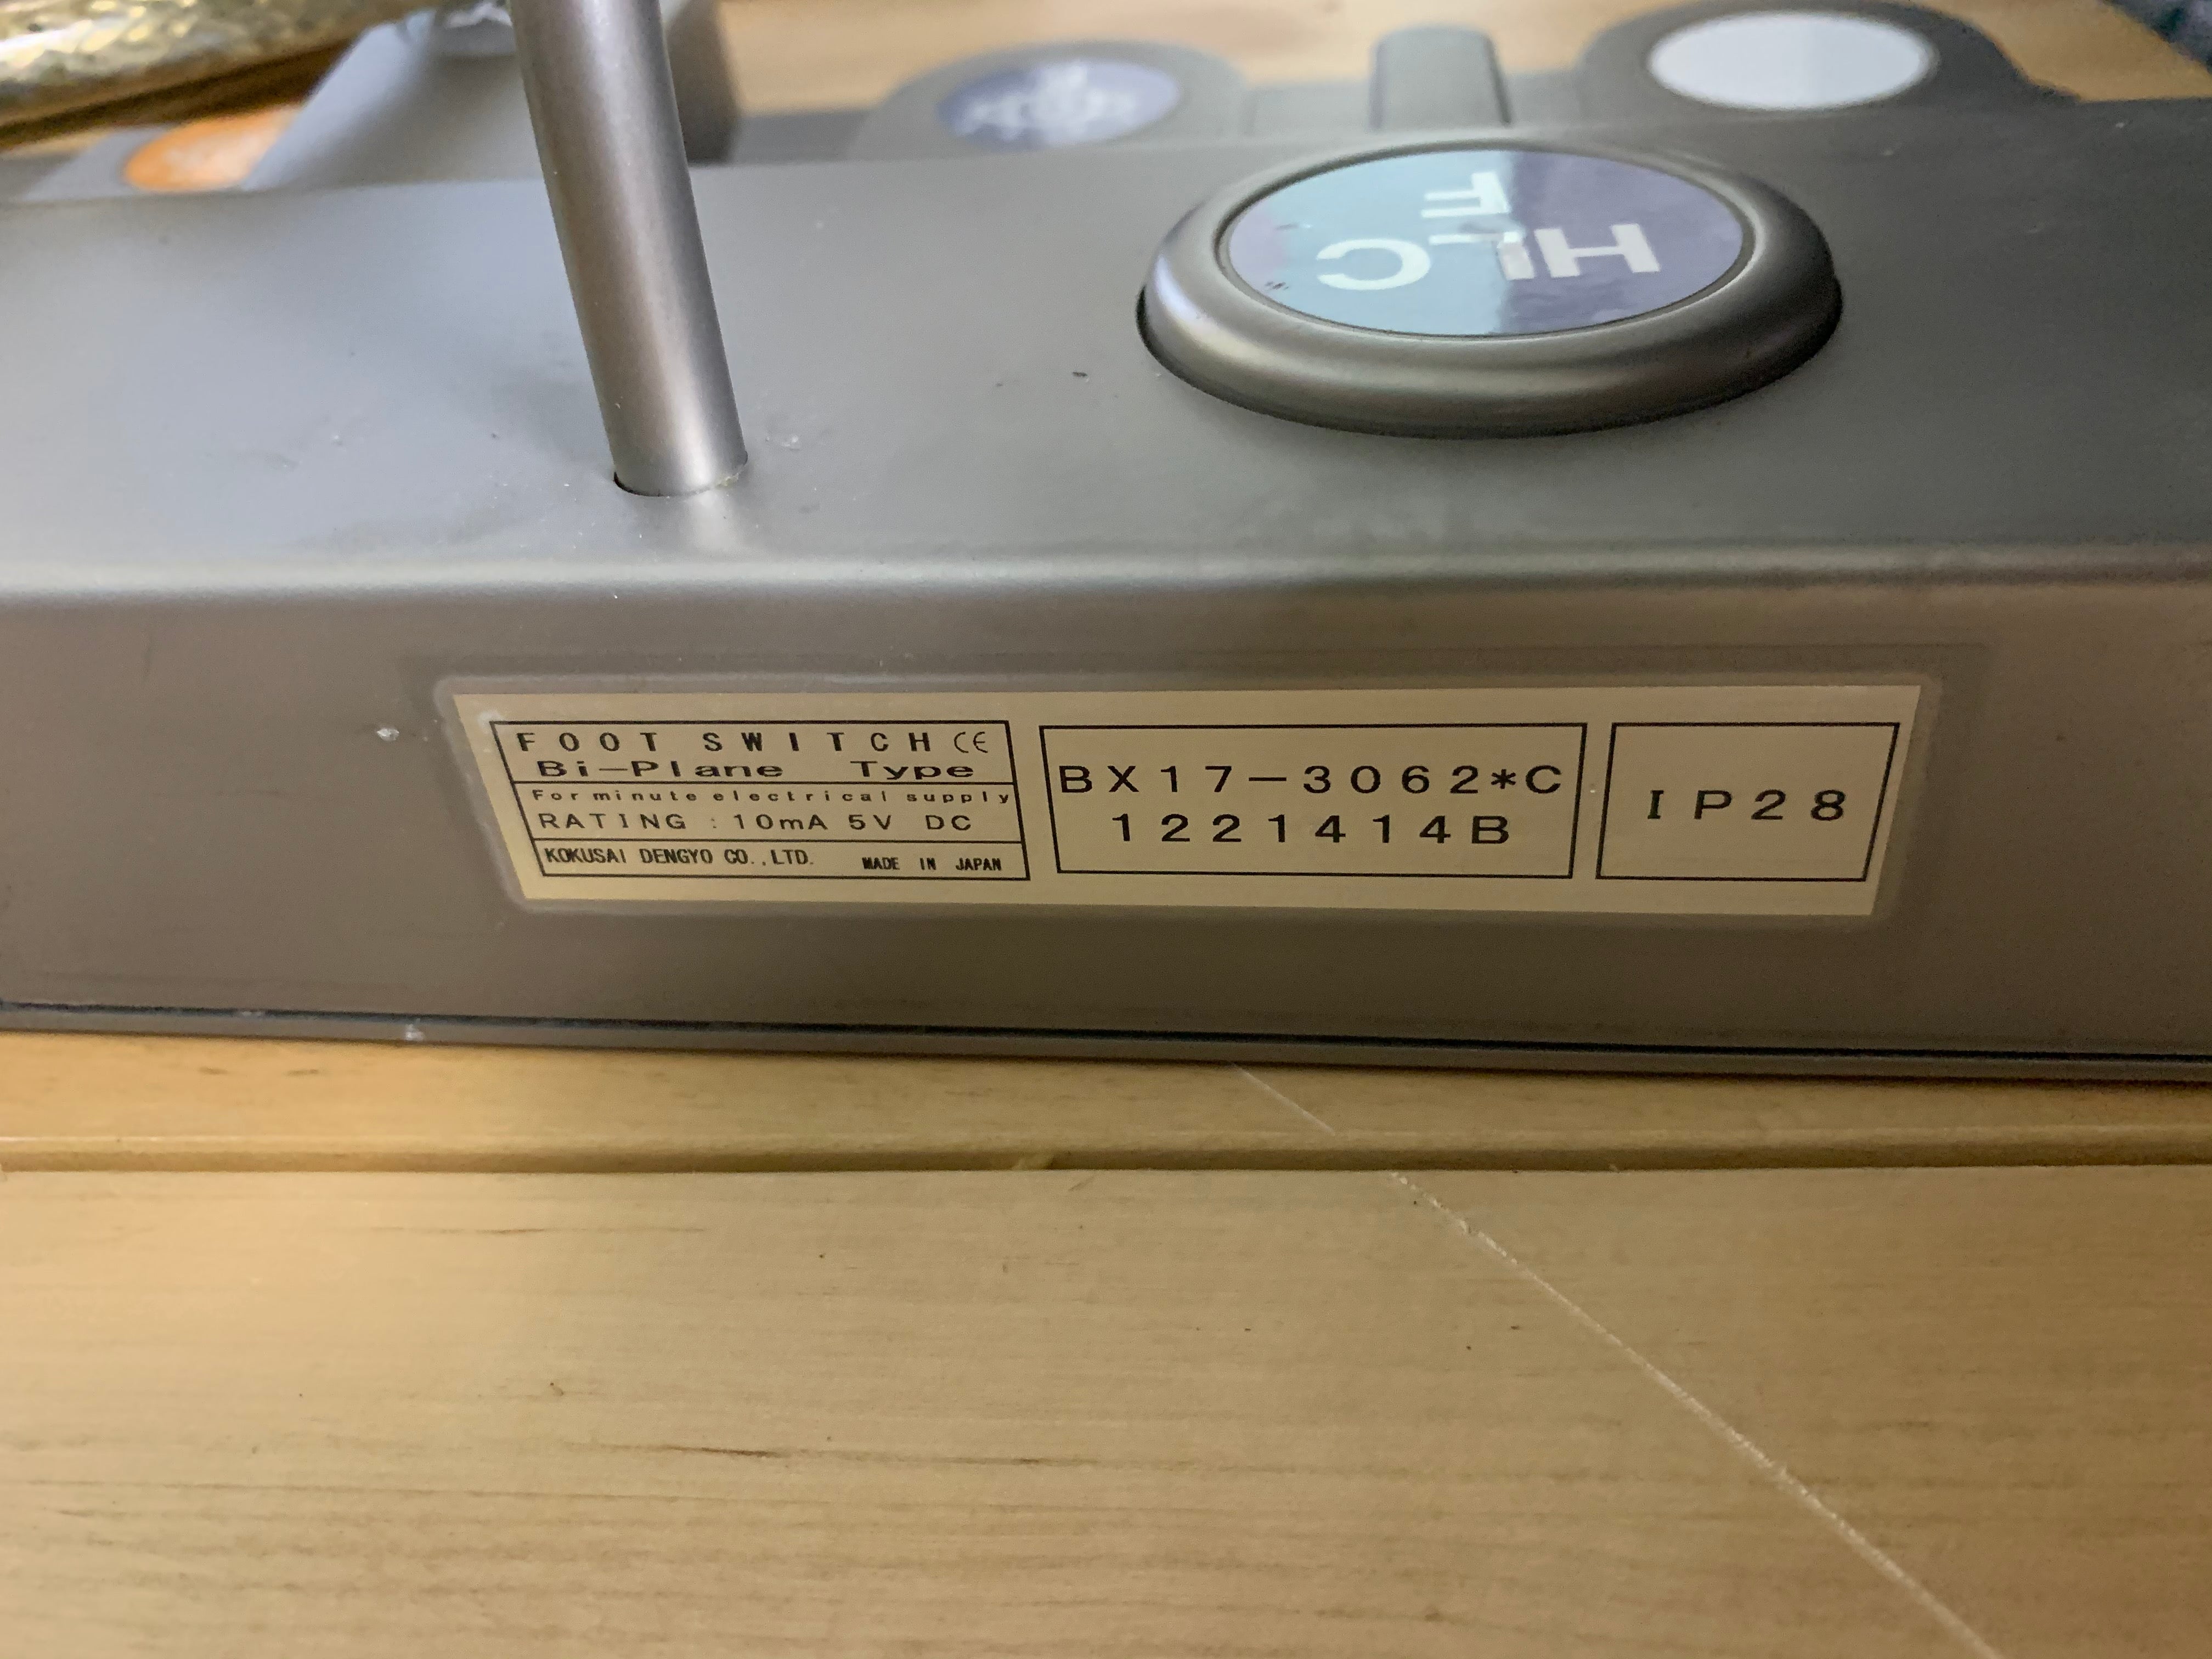 XBFS-880B  BiPlan Foot switch